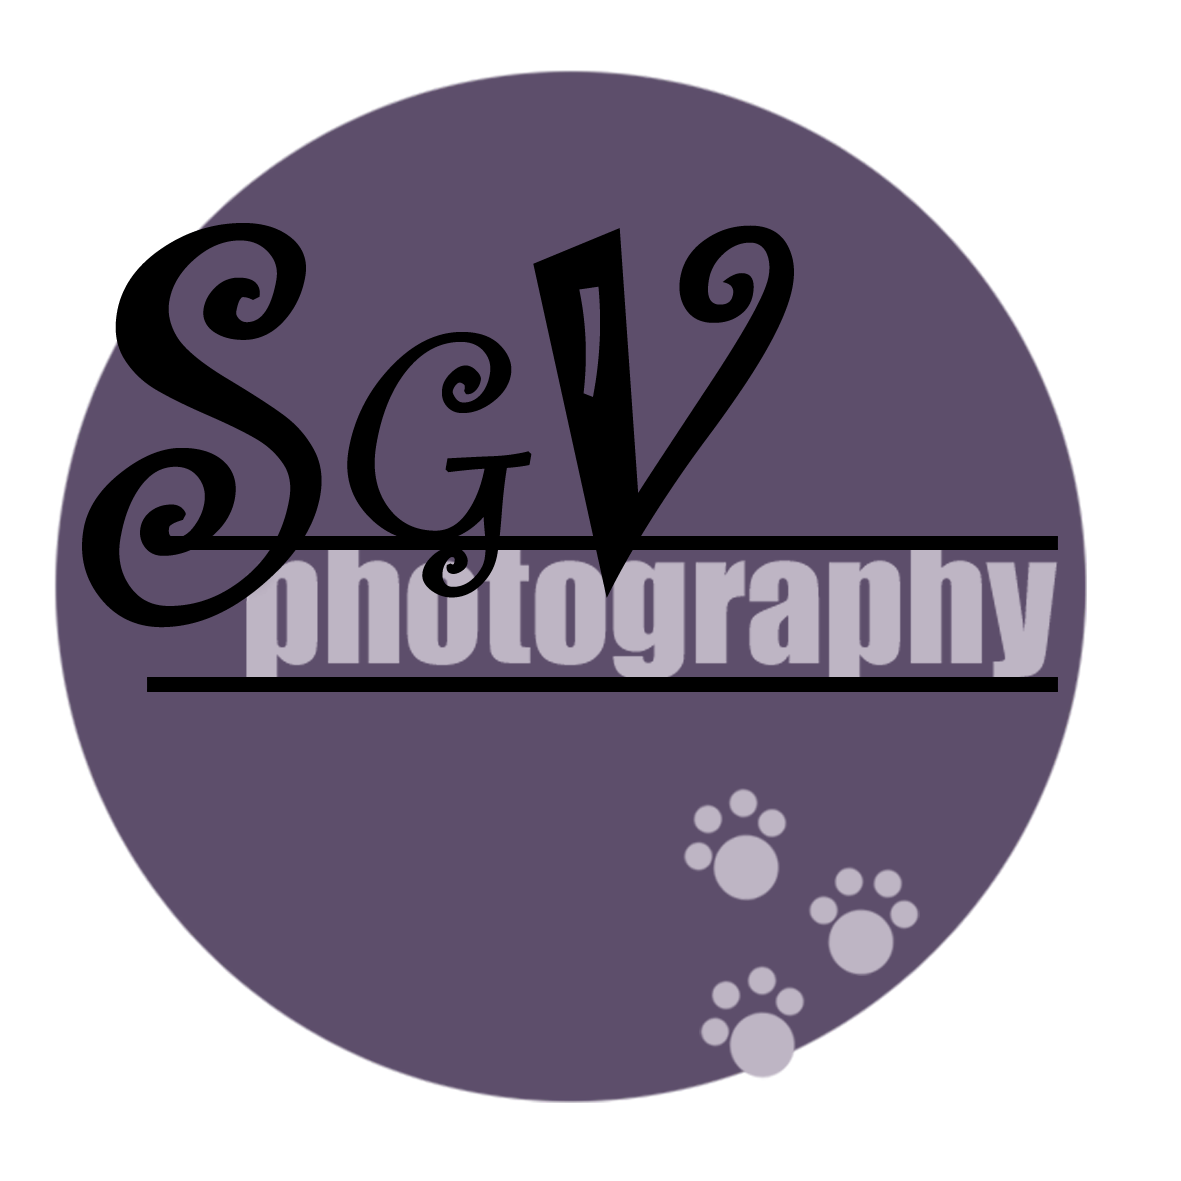 SGV Photography